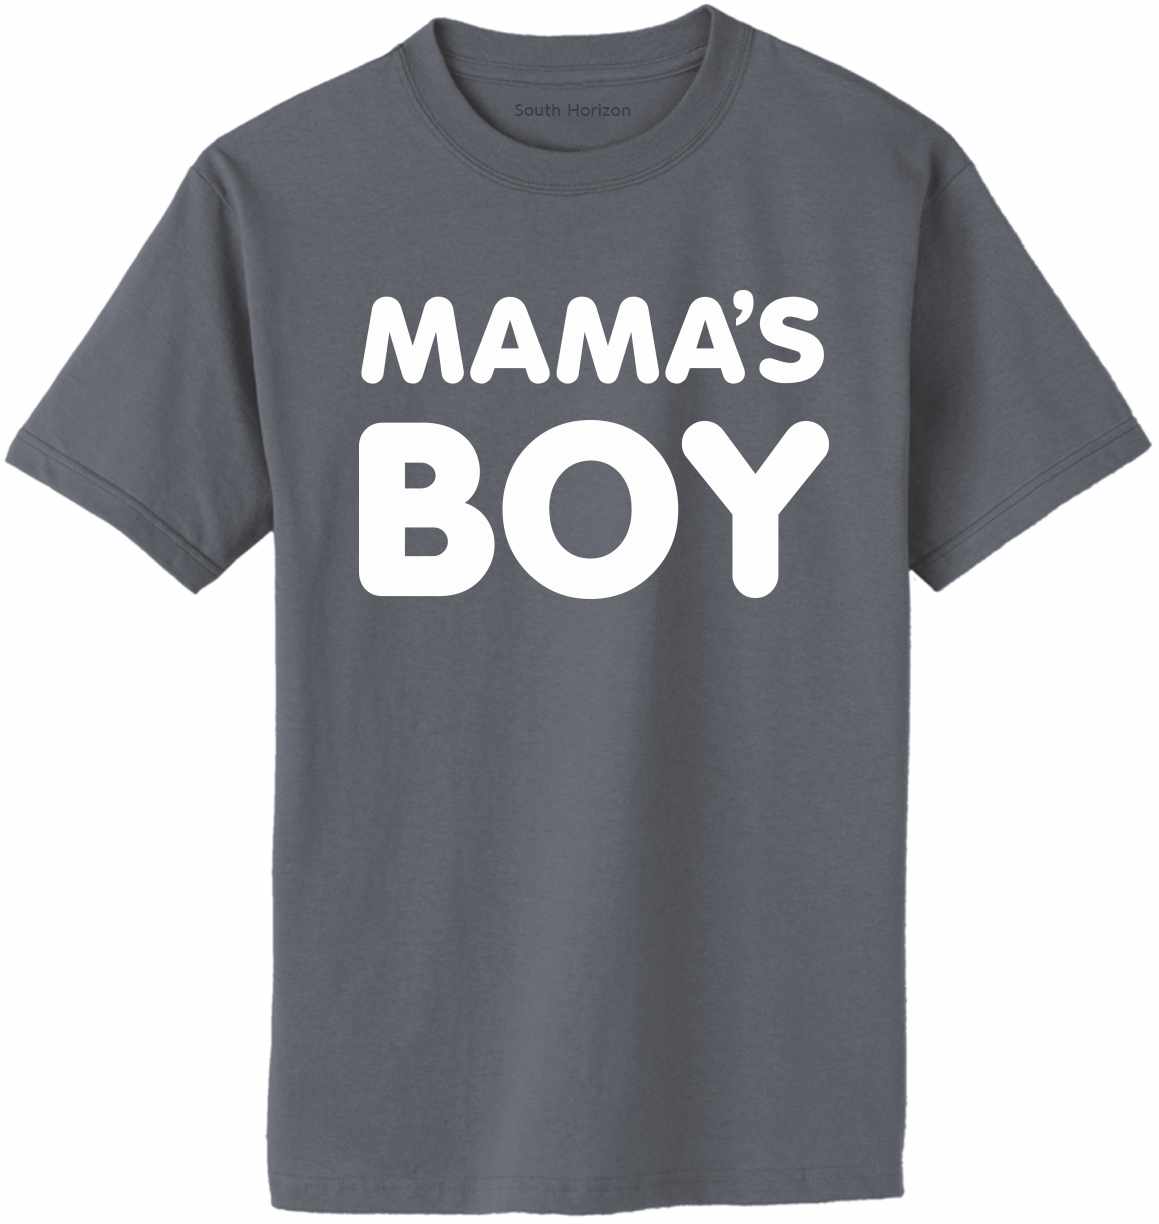 MAMA'S BOY on Adult T-Shirt (#1185-1)